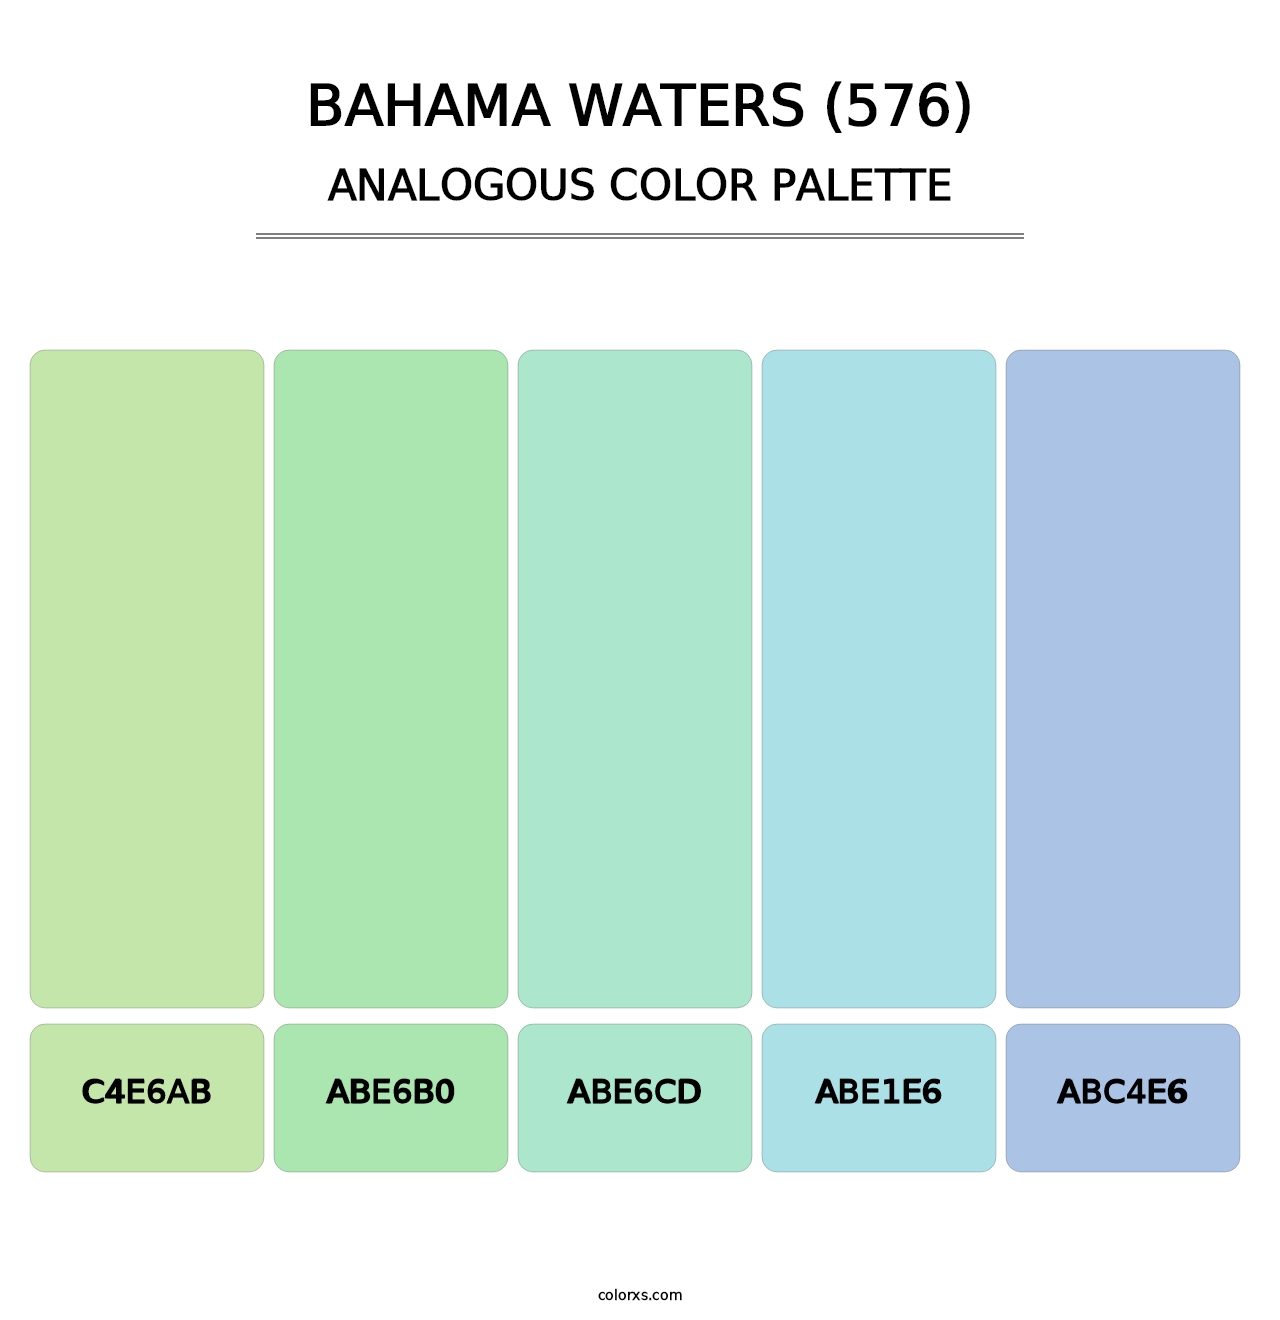 Bahama Waters (576) - Analogous Color Palette